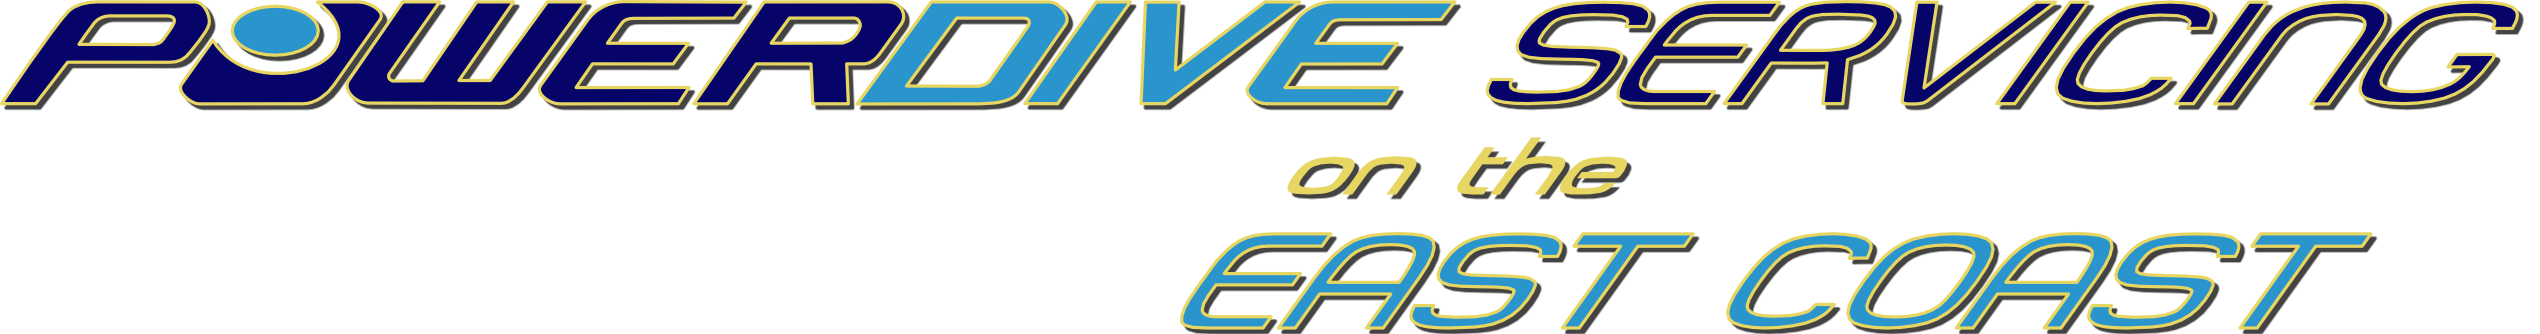 East Coast Powerdive service logo